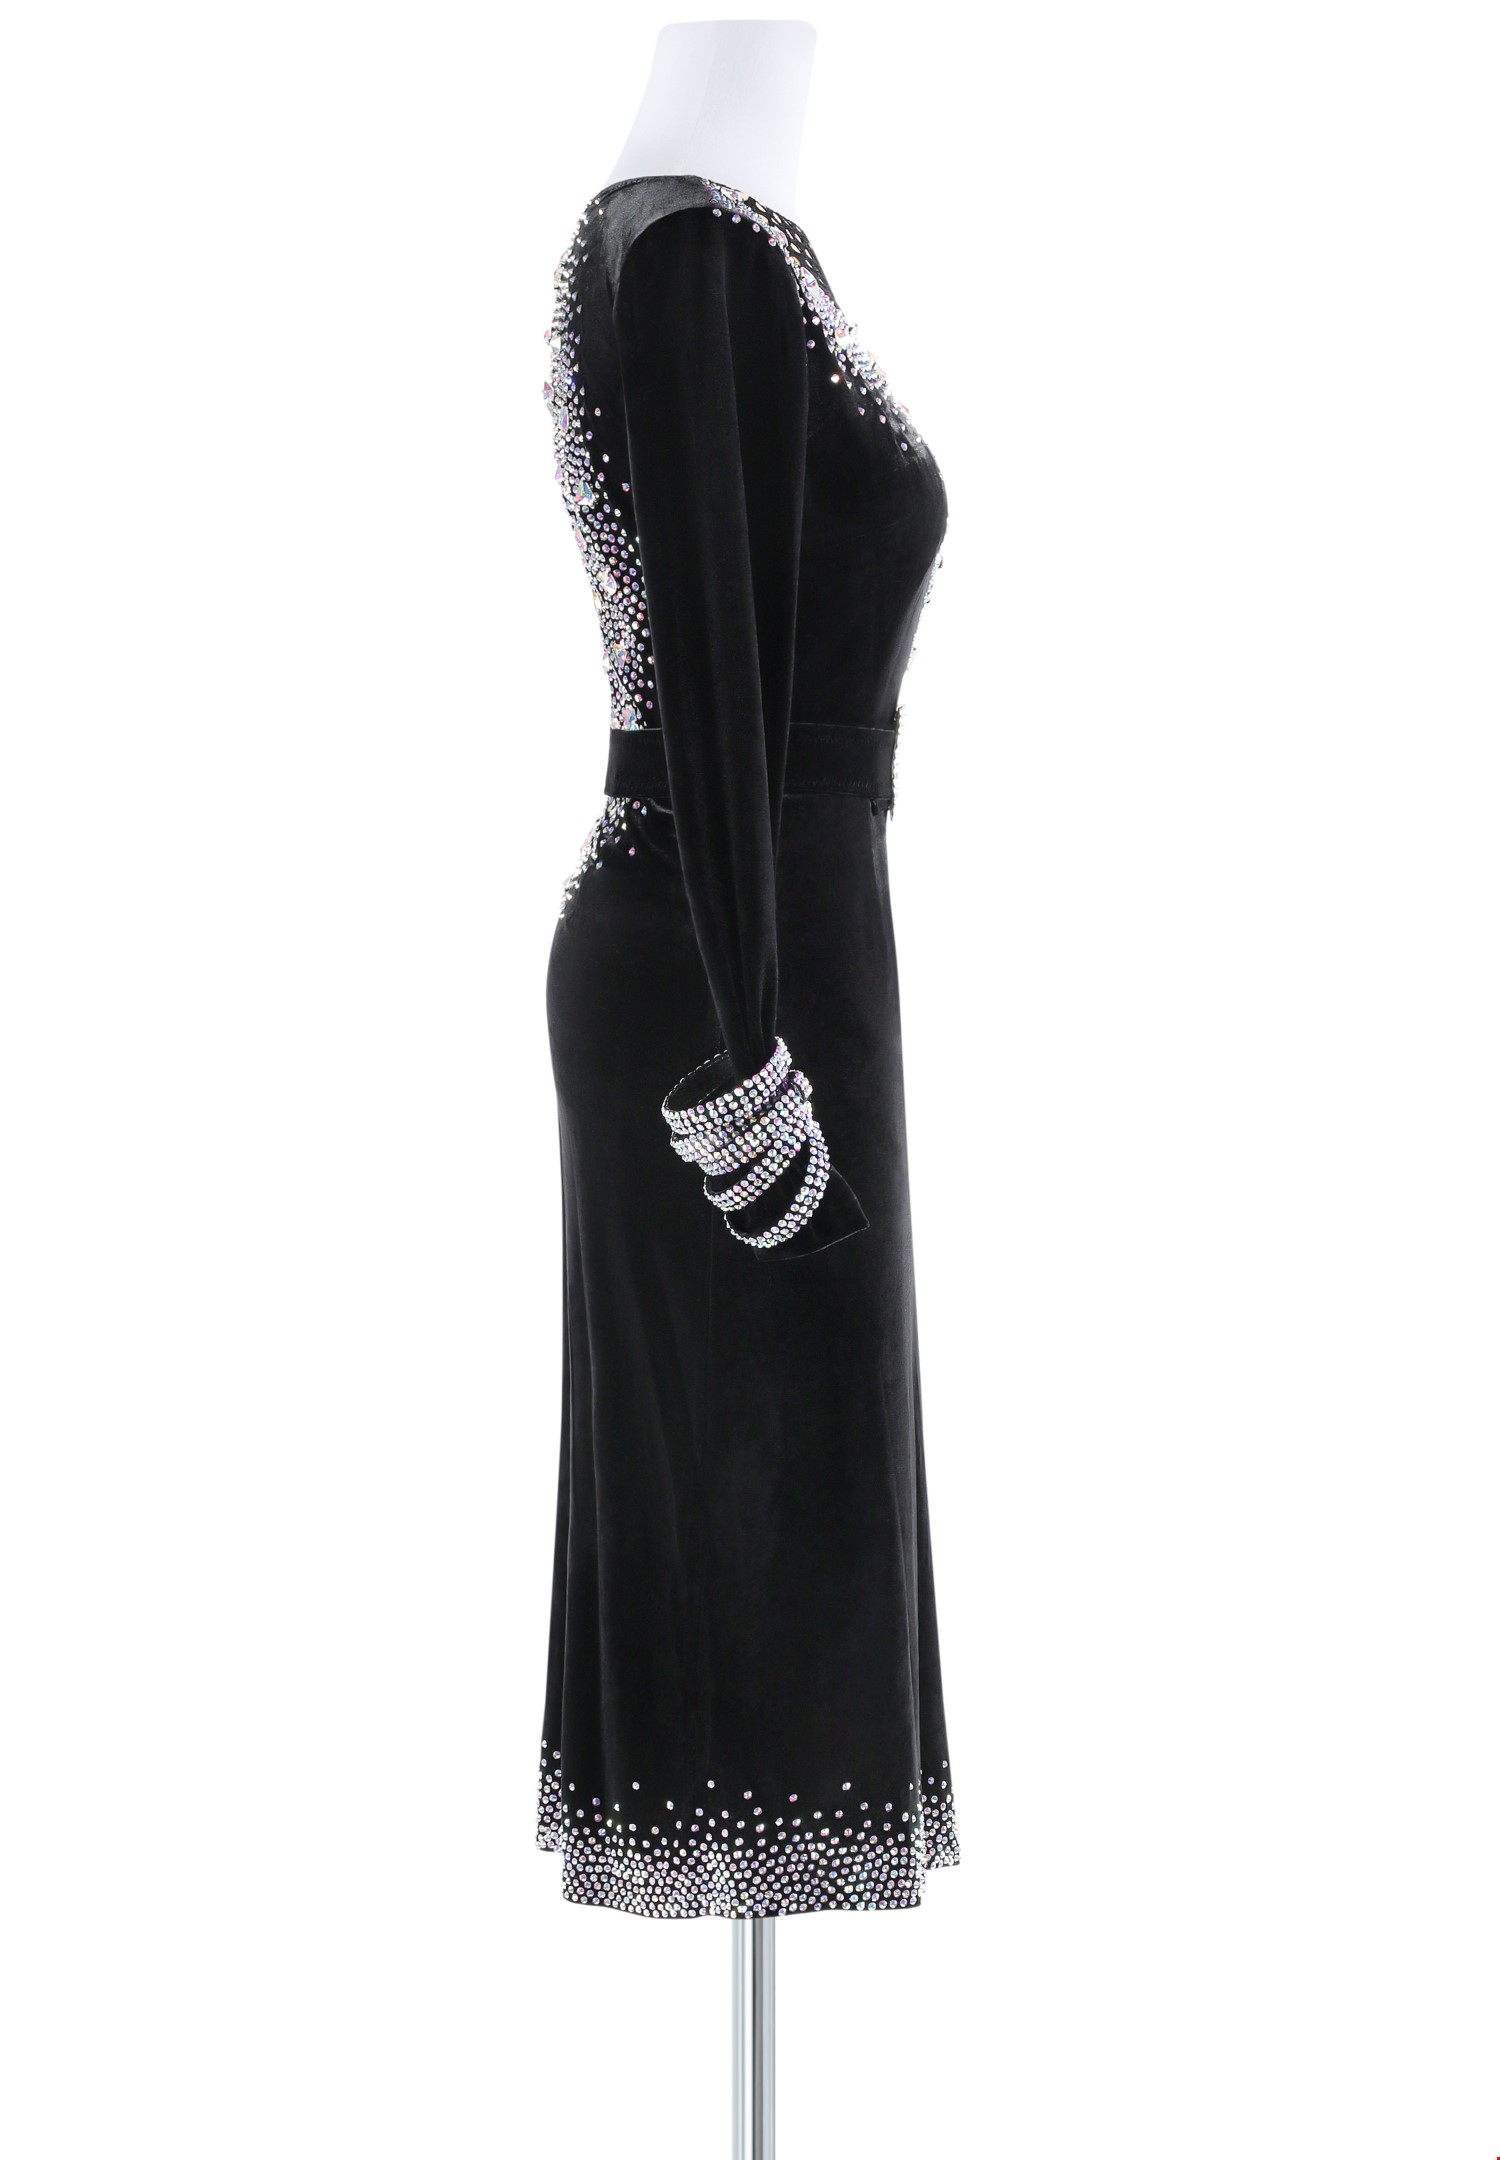 Black Mesh and Velvet Long Sleeve Unitard - Rhinestones – Crystal Couture